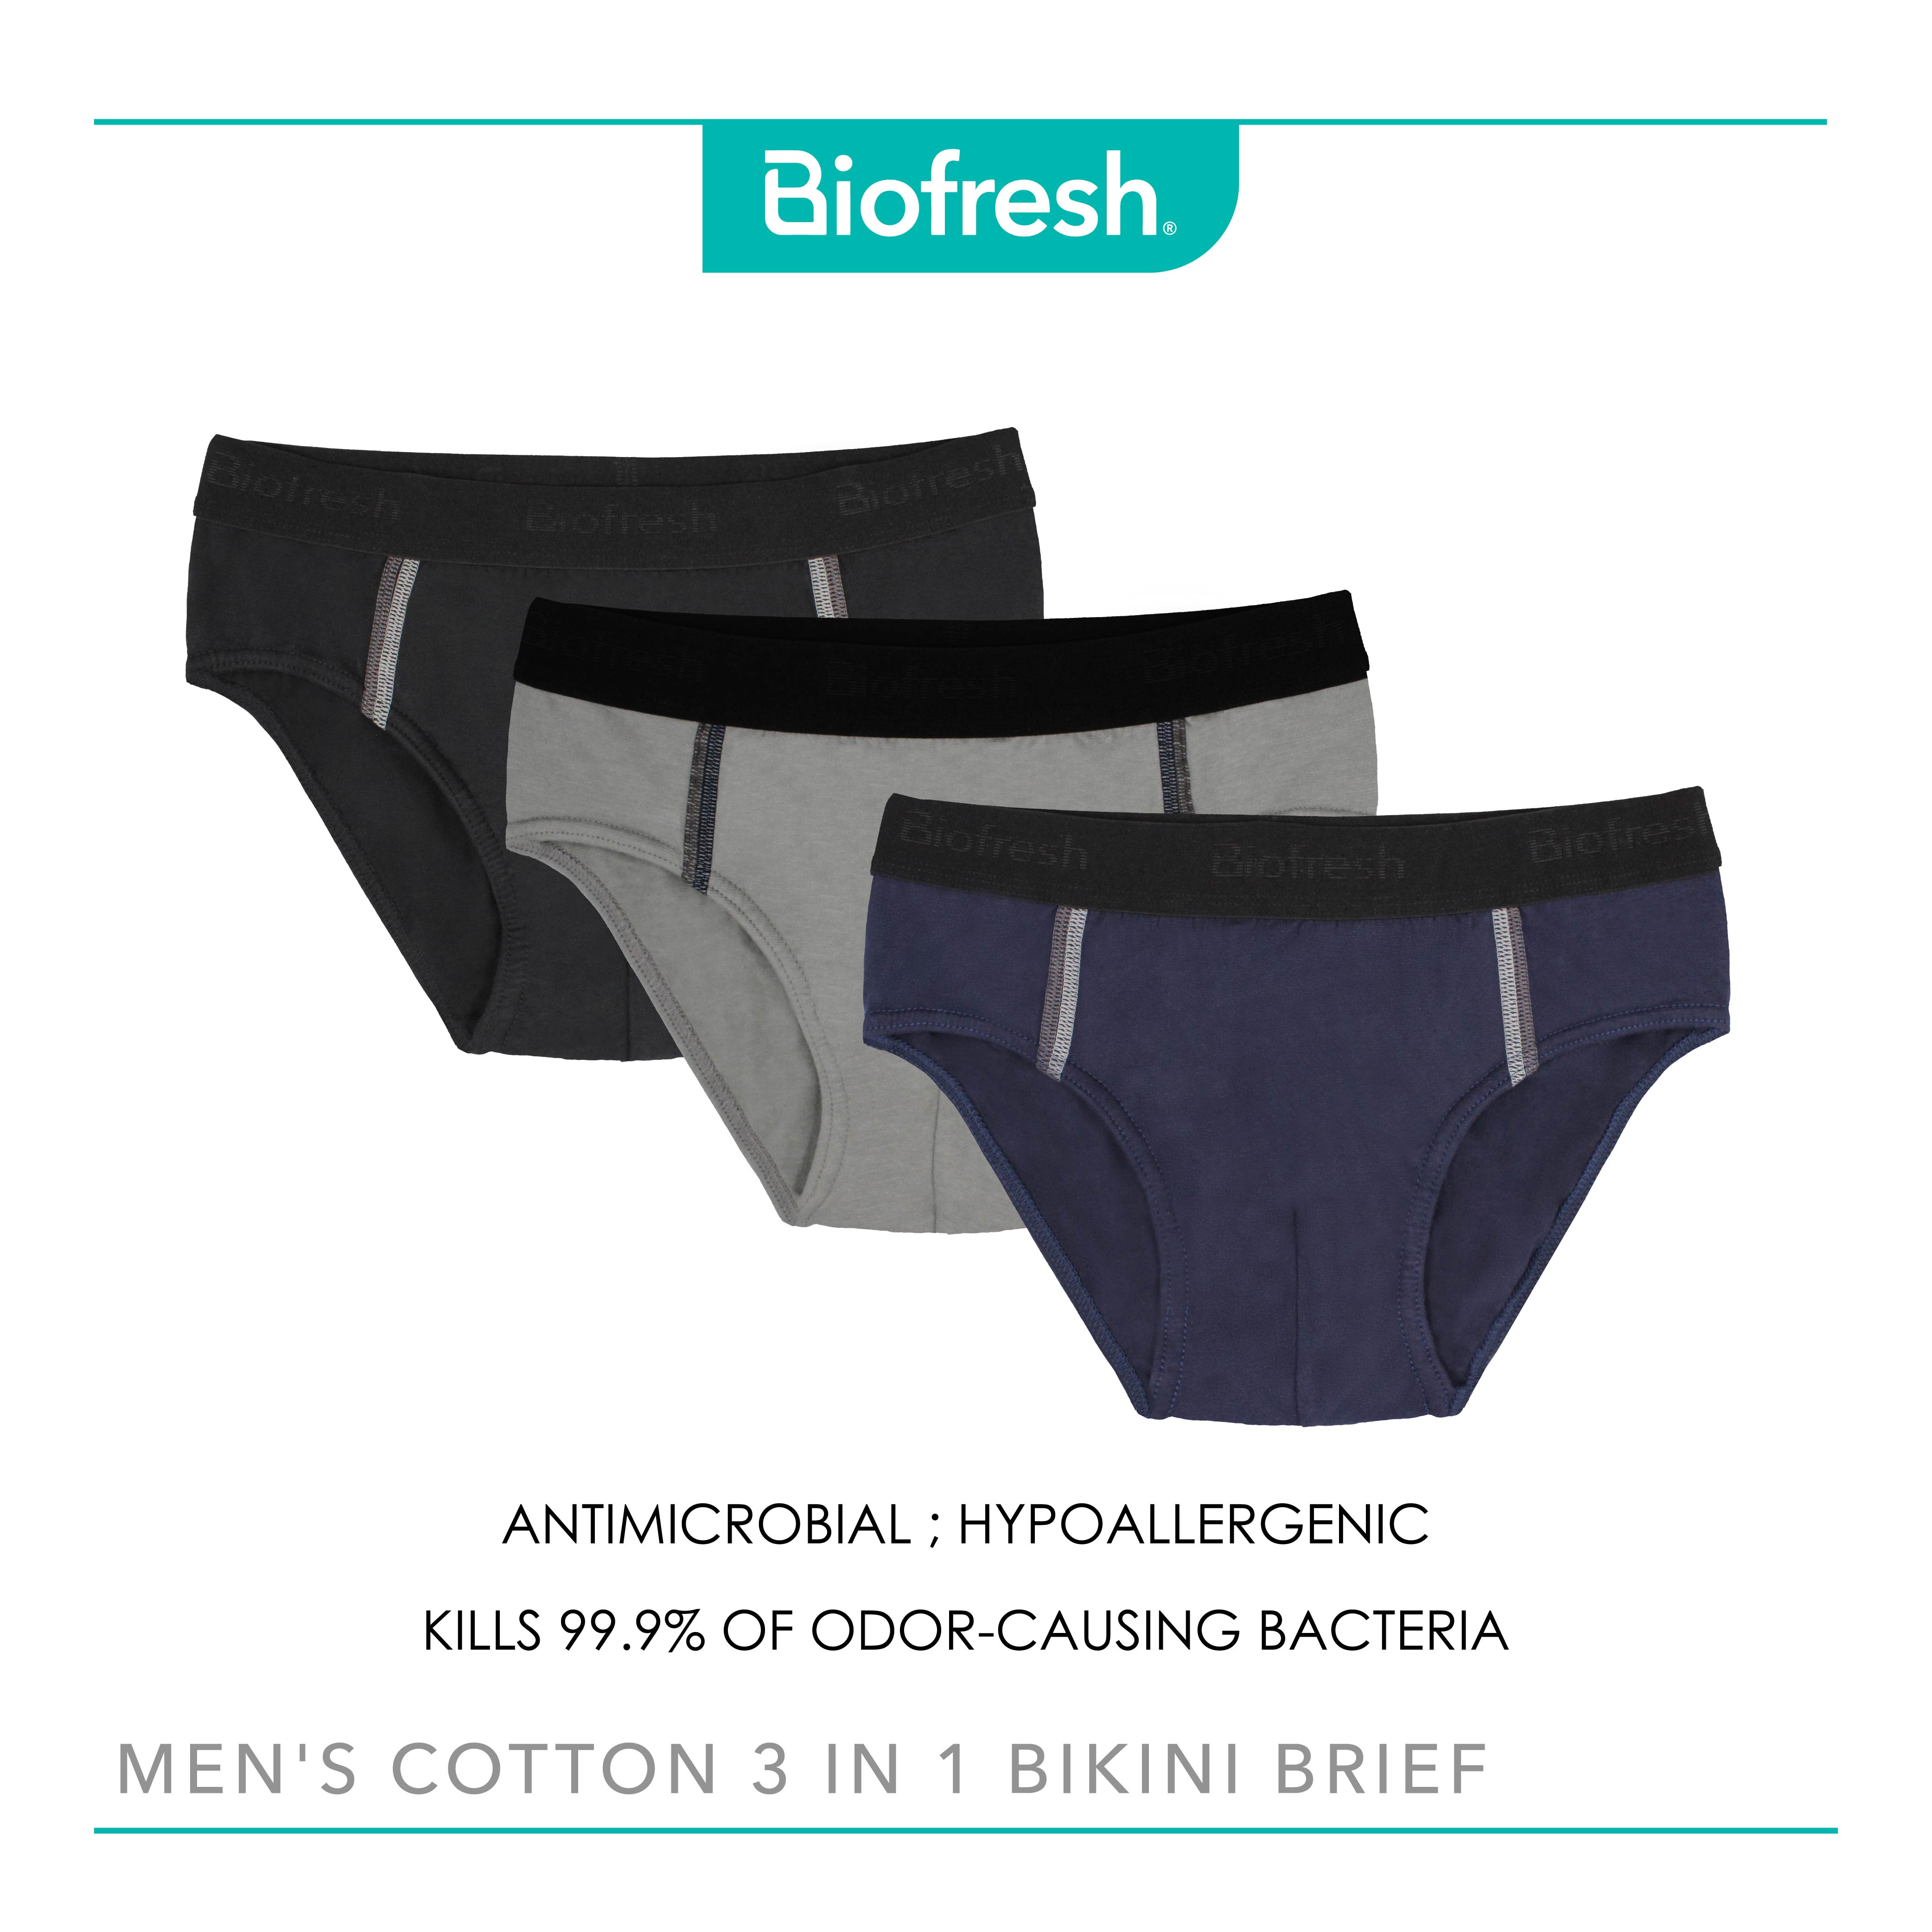 Biofresh Men's Antimicrobial Cotton Bikini Brief 3 pieces in a pack ...